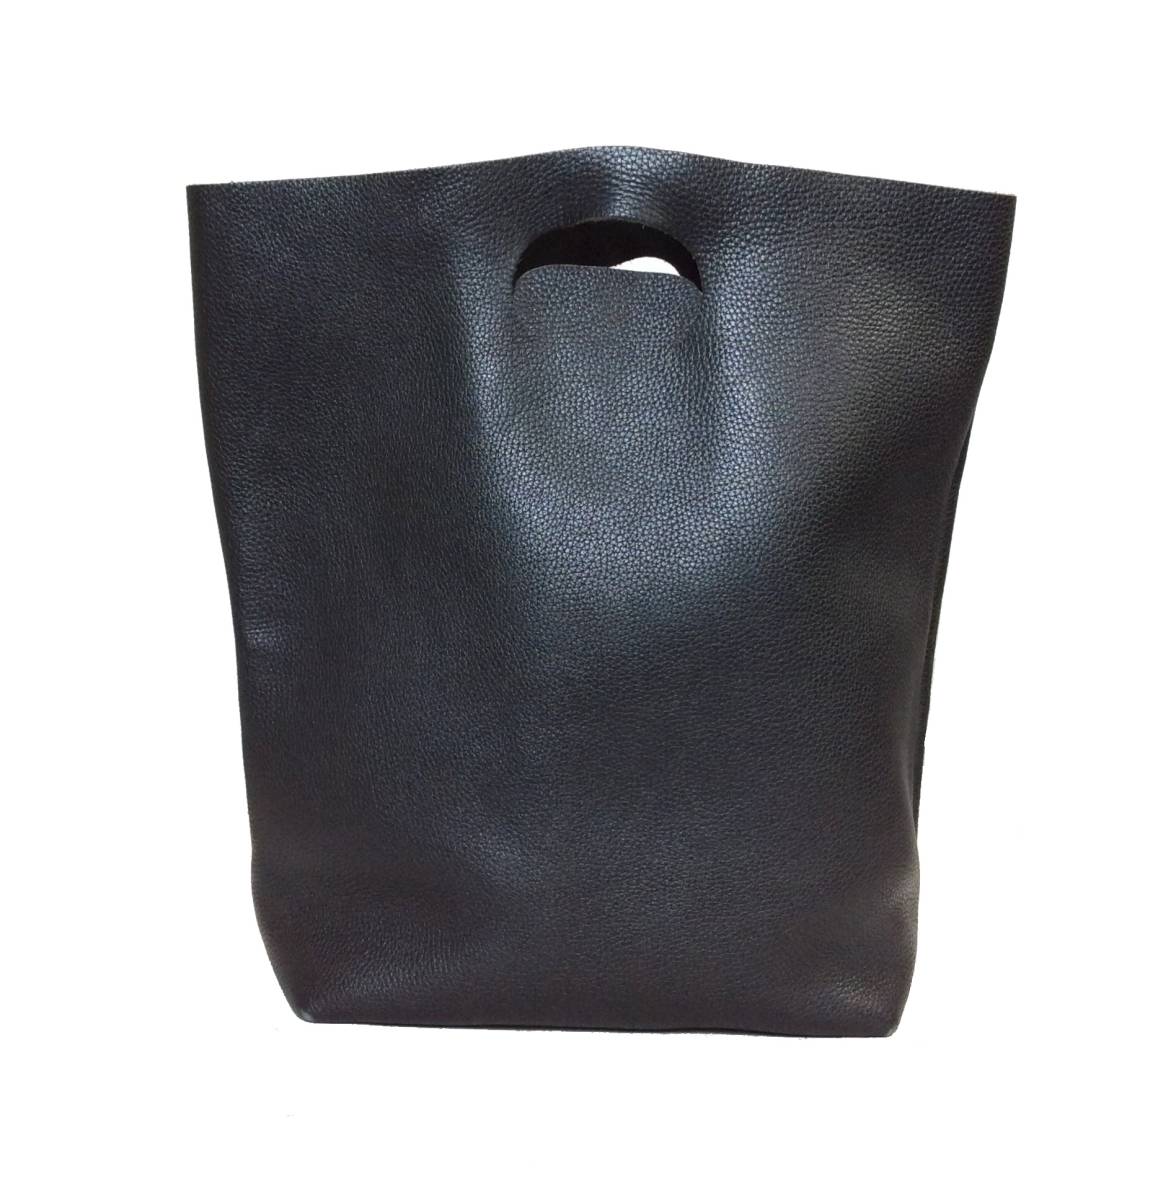 Hender Scheme エンダースキーマ NOT ECO BAG レザー トートバッグ 鞄 ブラック 黒 大きめサイズ